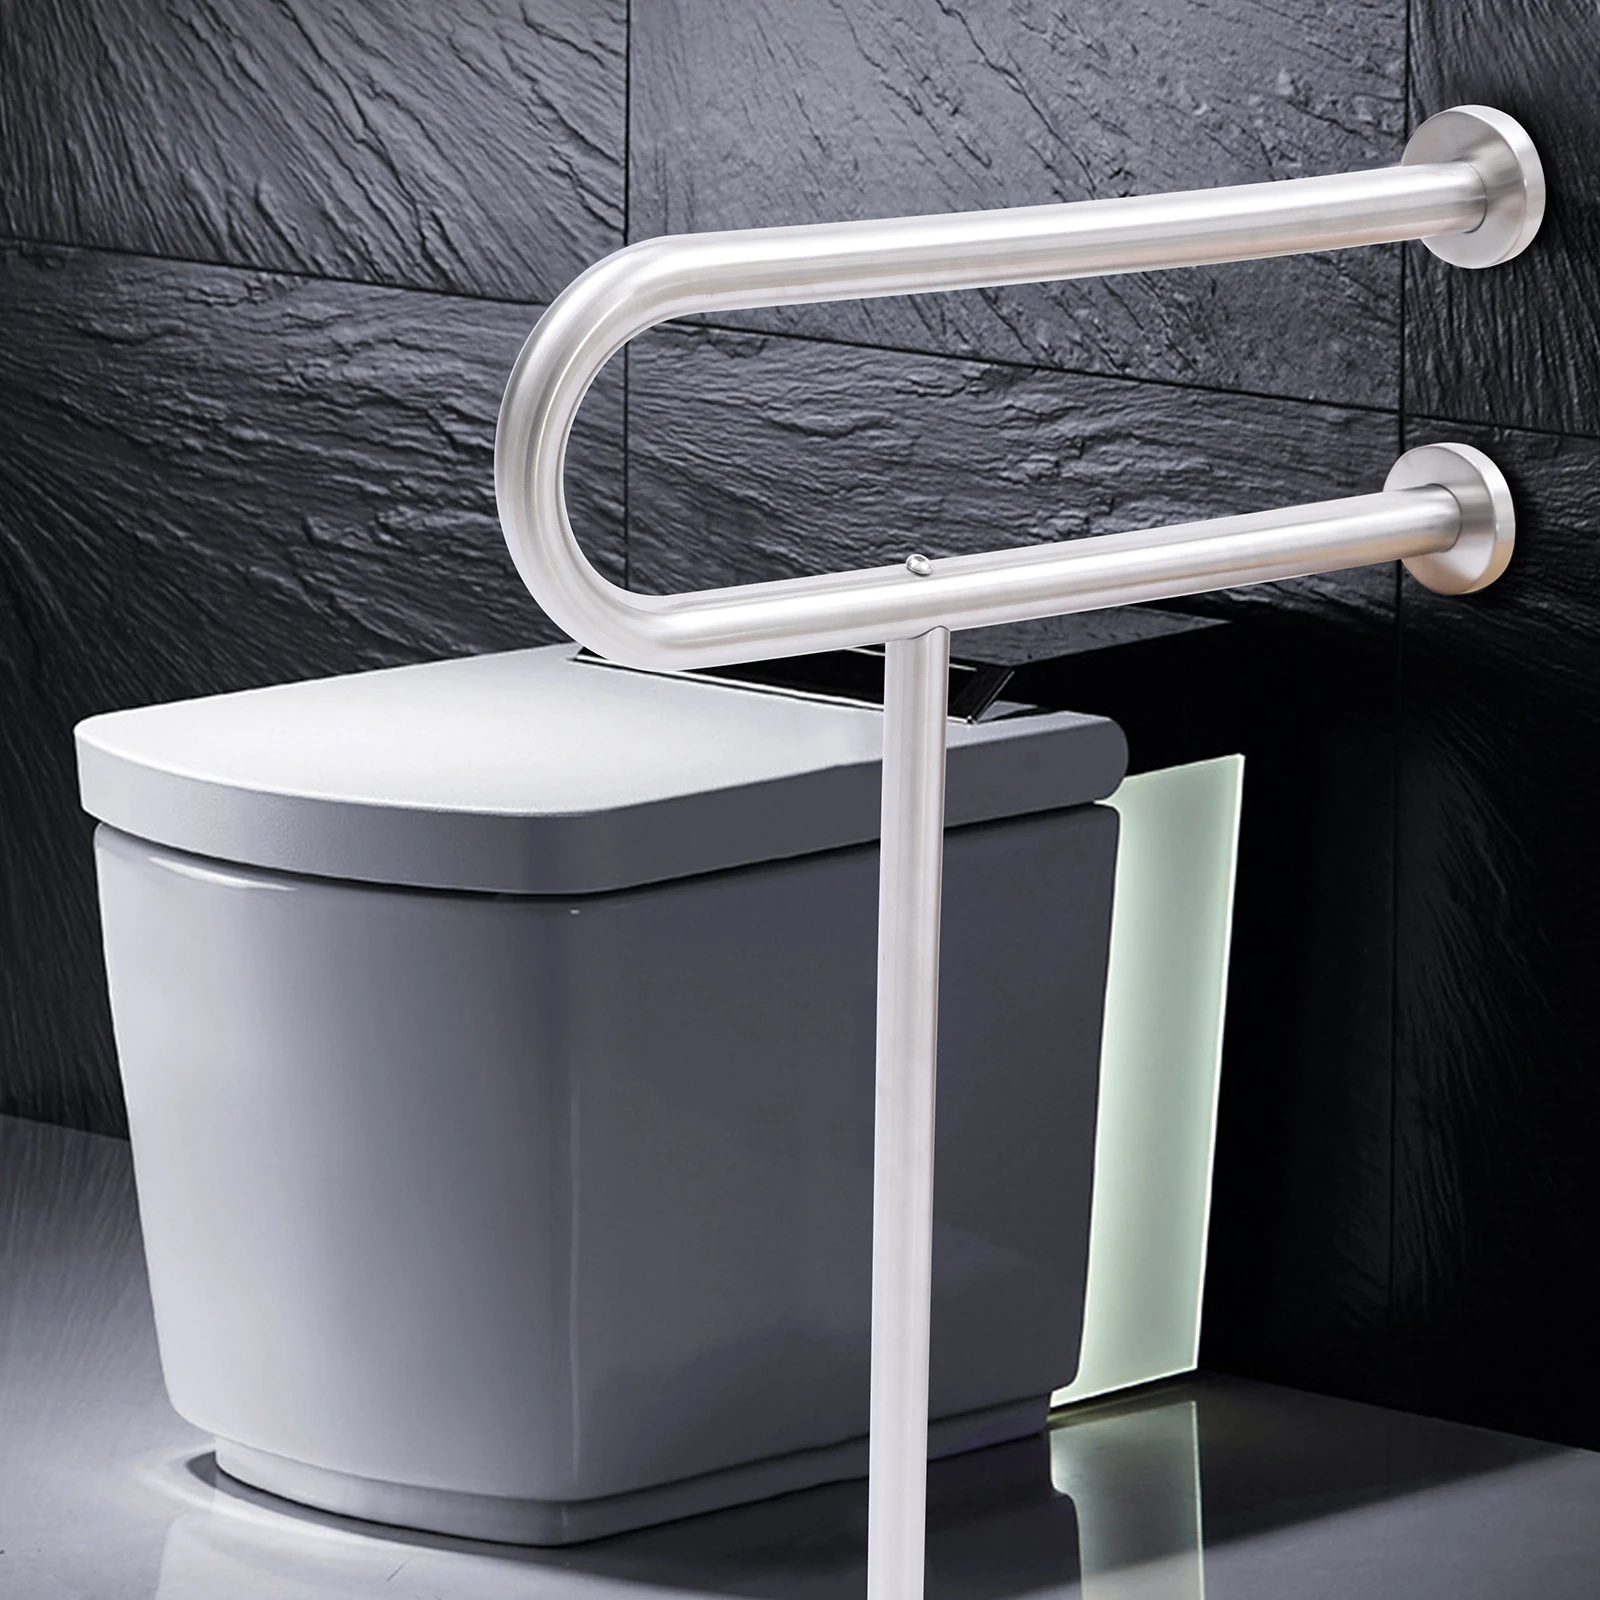 Elderly Safety Handrail Shower Helping Disabled People Toilet Handrail  Stainless Steel Agarrador Ducha Bathroom Accessories - AliExpress